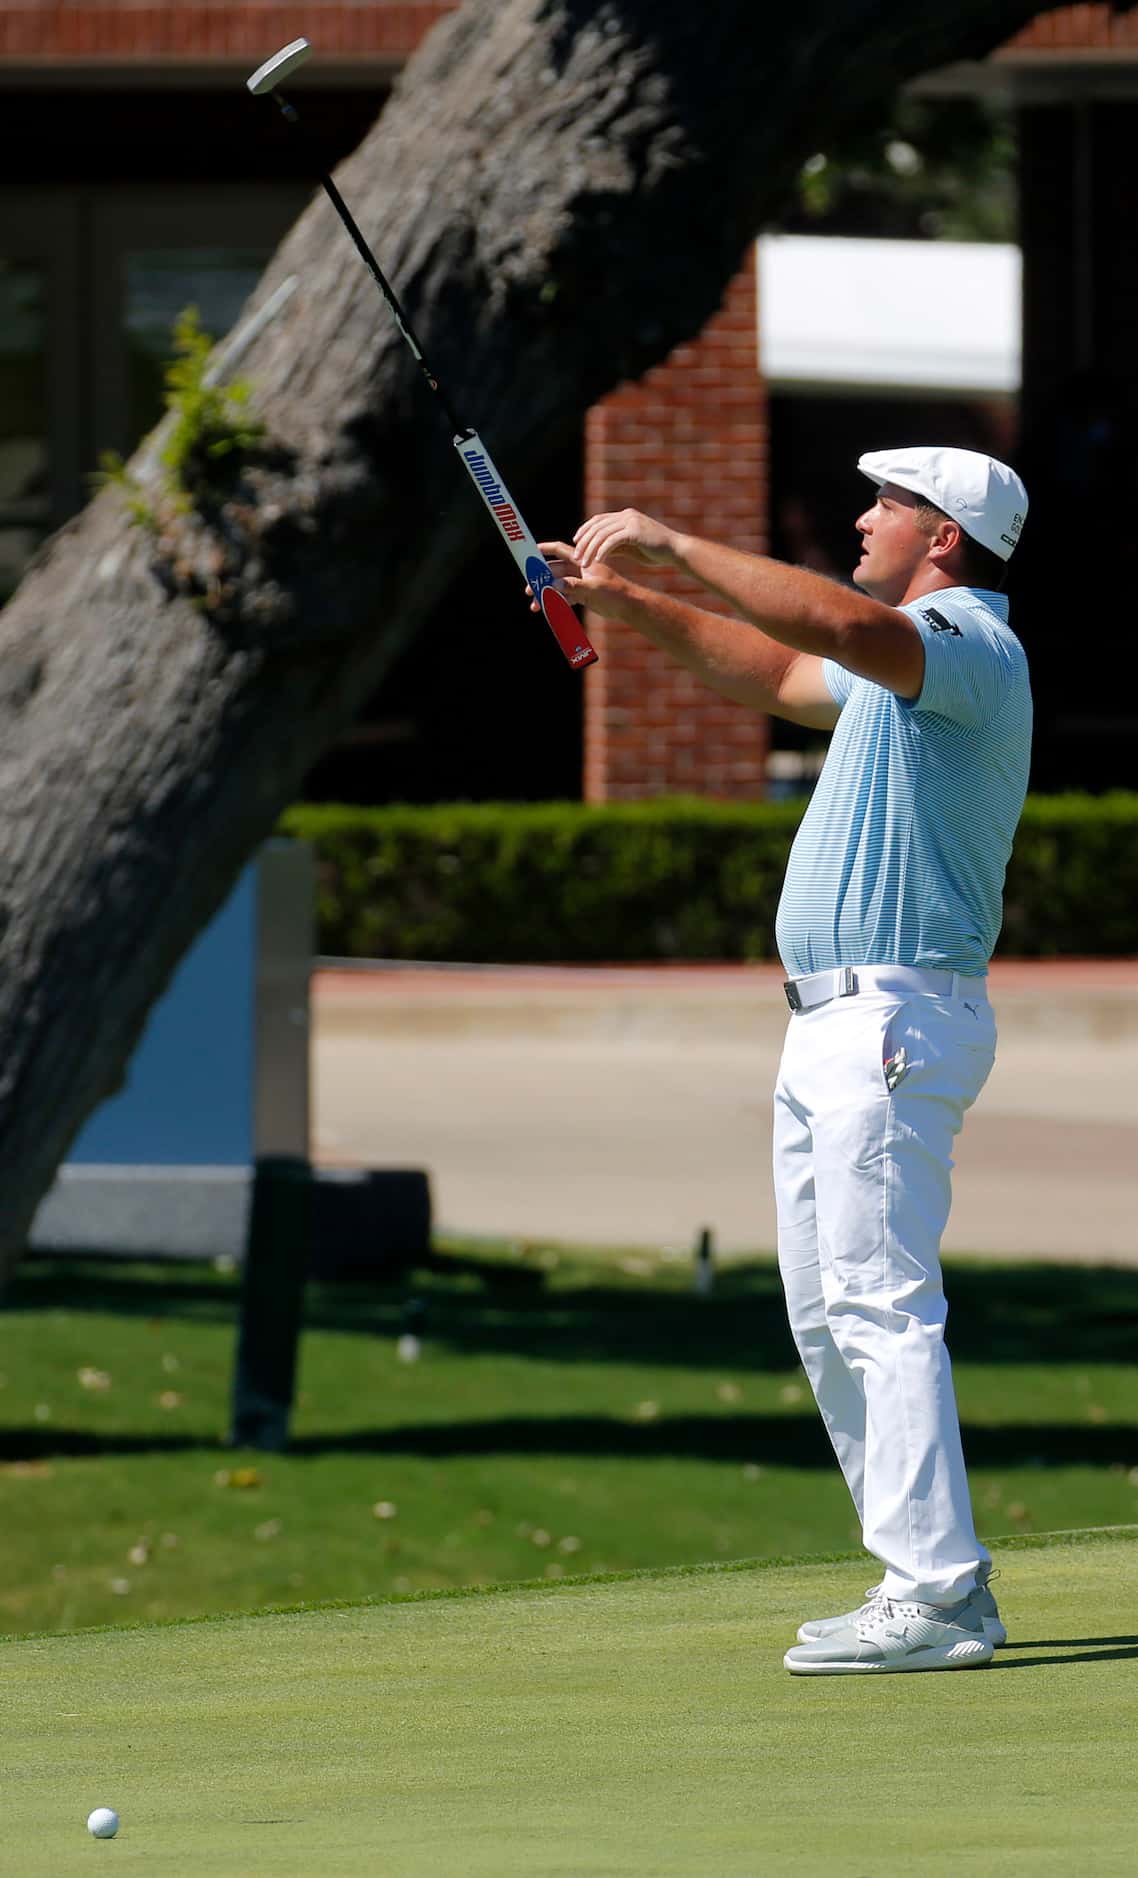 PGA Tour golfer Bryson DeChambeau
tosses his putter as he misses a birdie putt on No. 18...